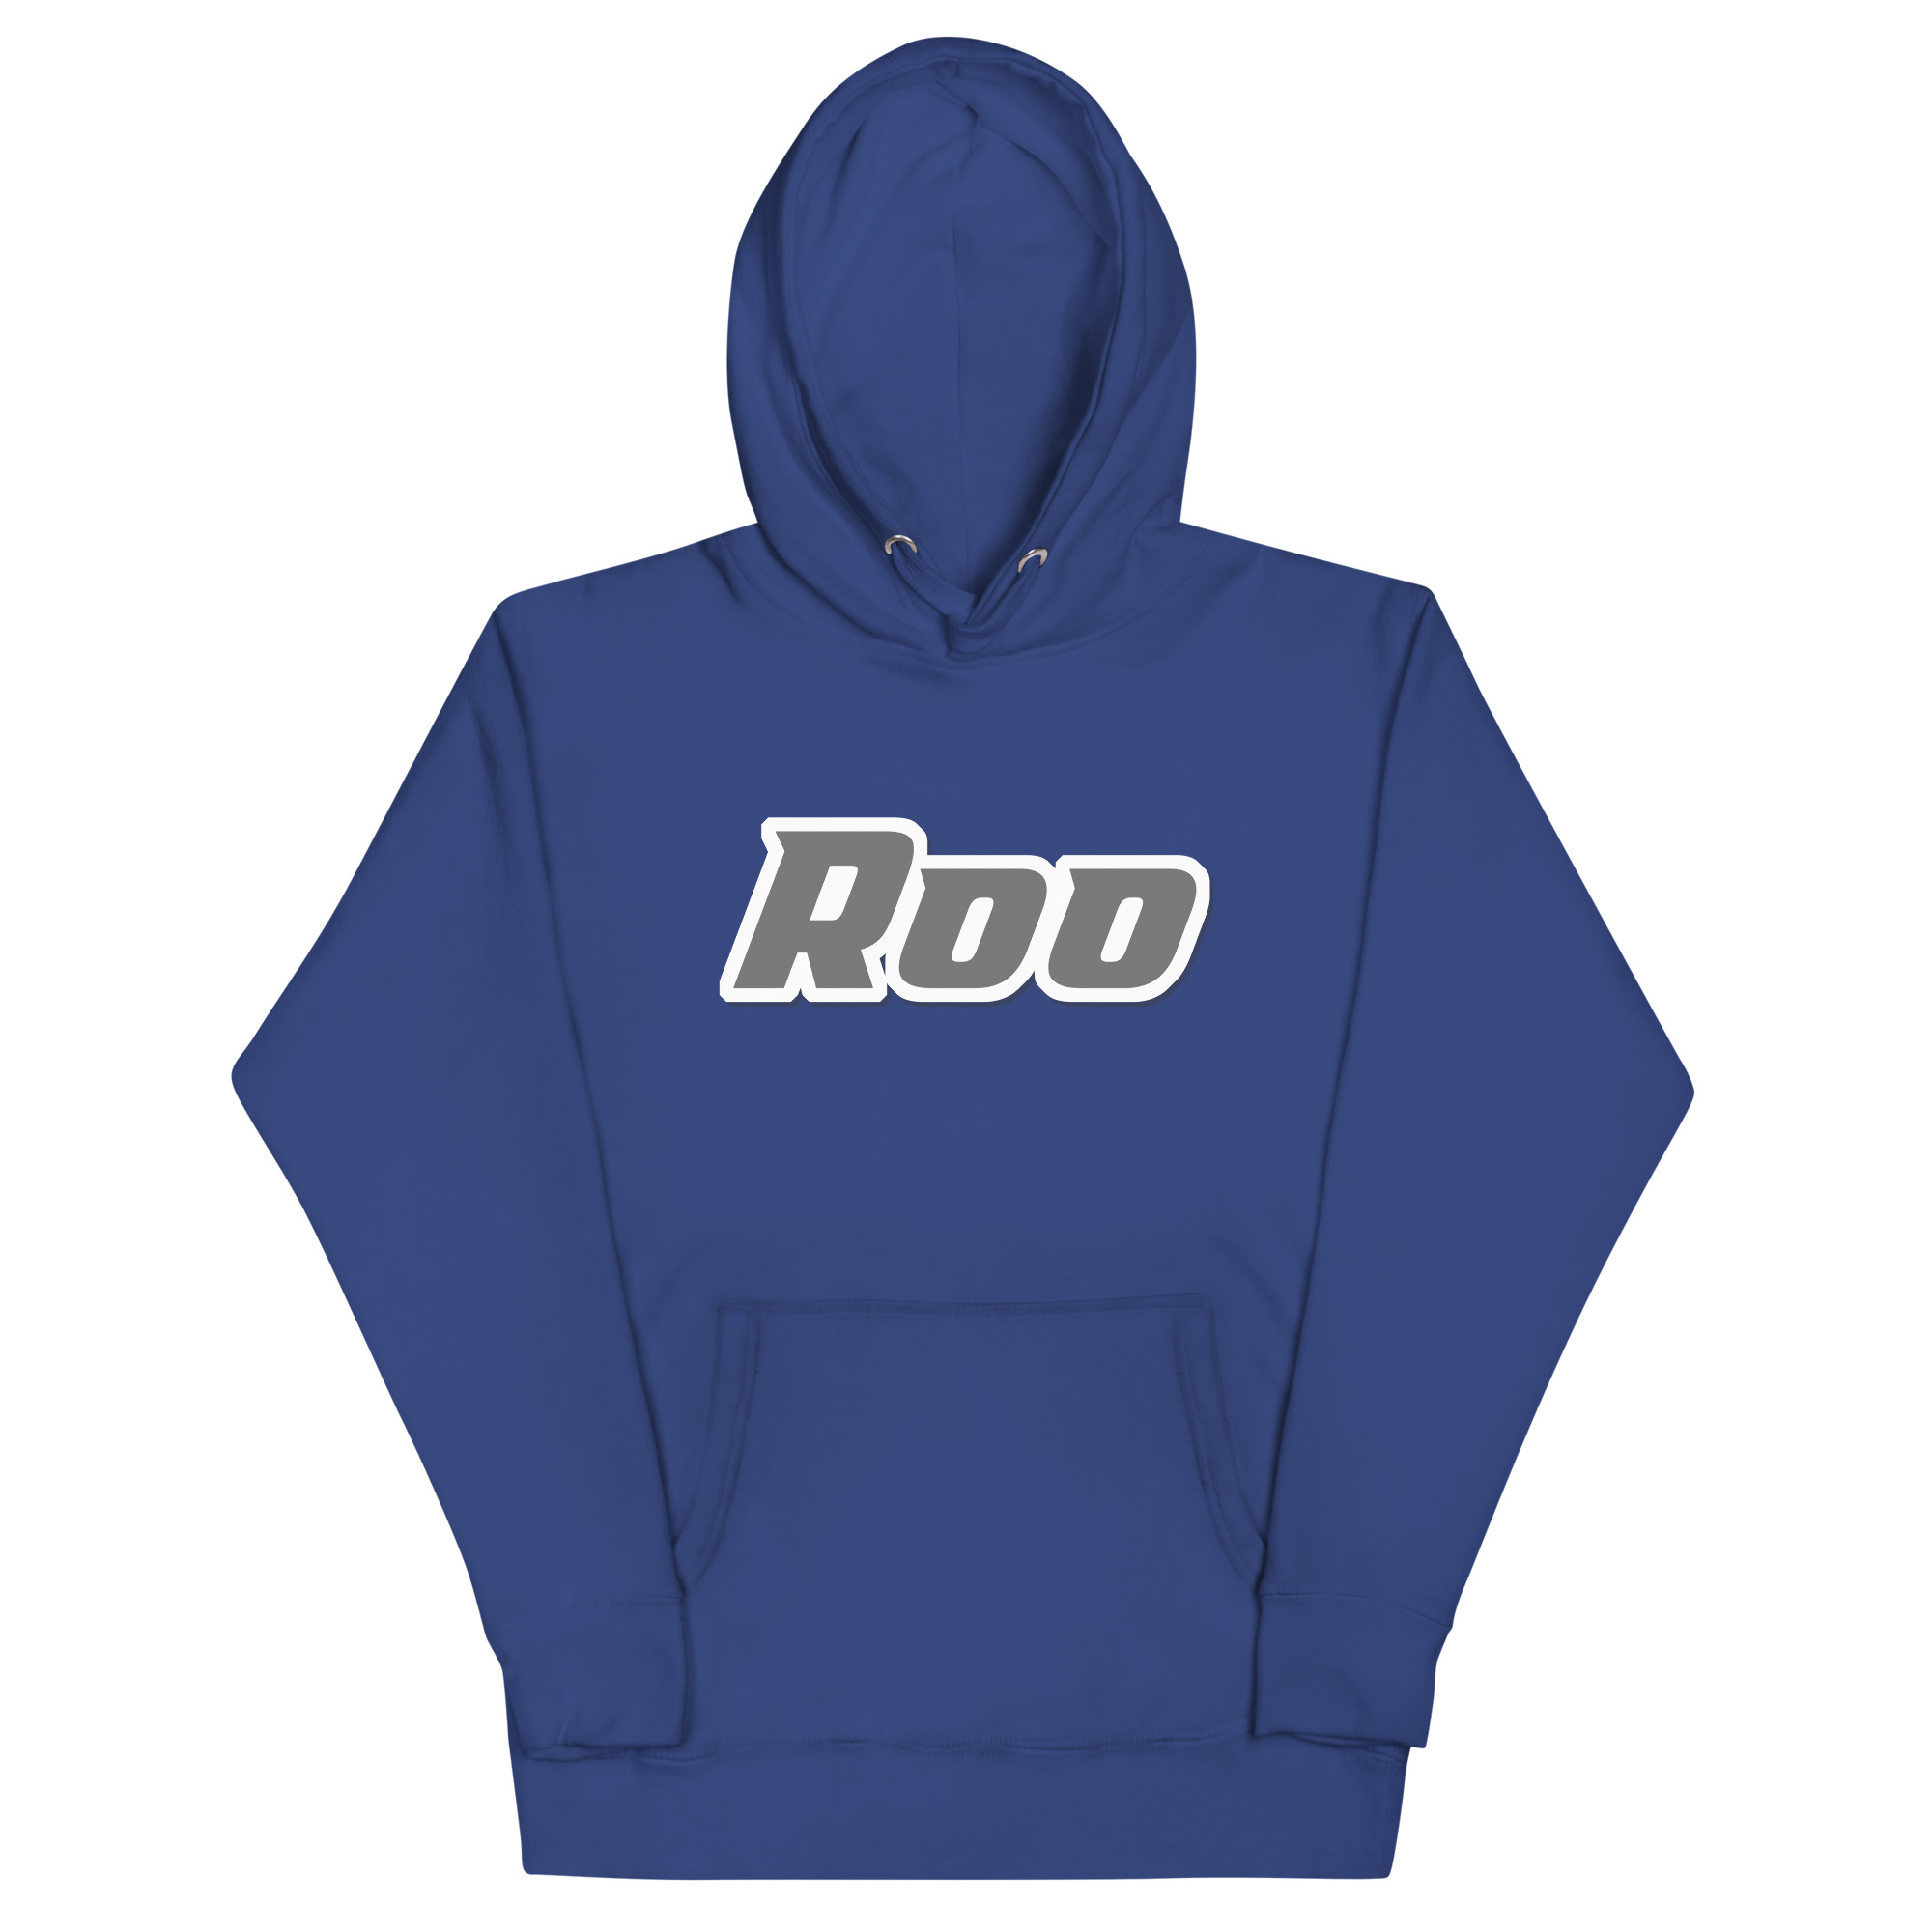 unisex-premium-hoodie-team-royal-front-6525994089aec.jpg